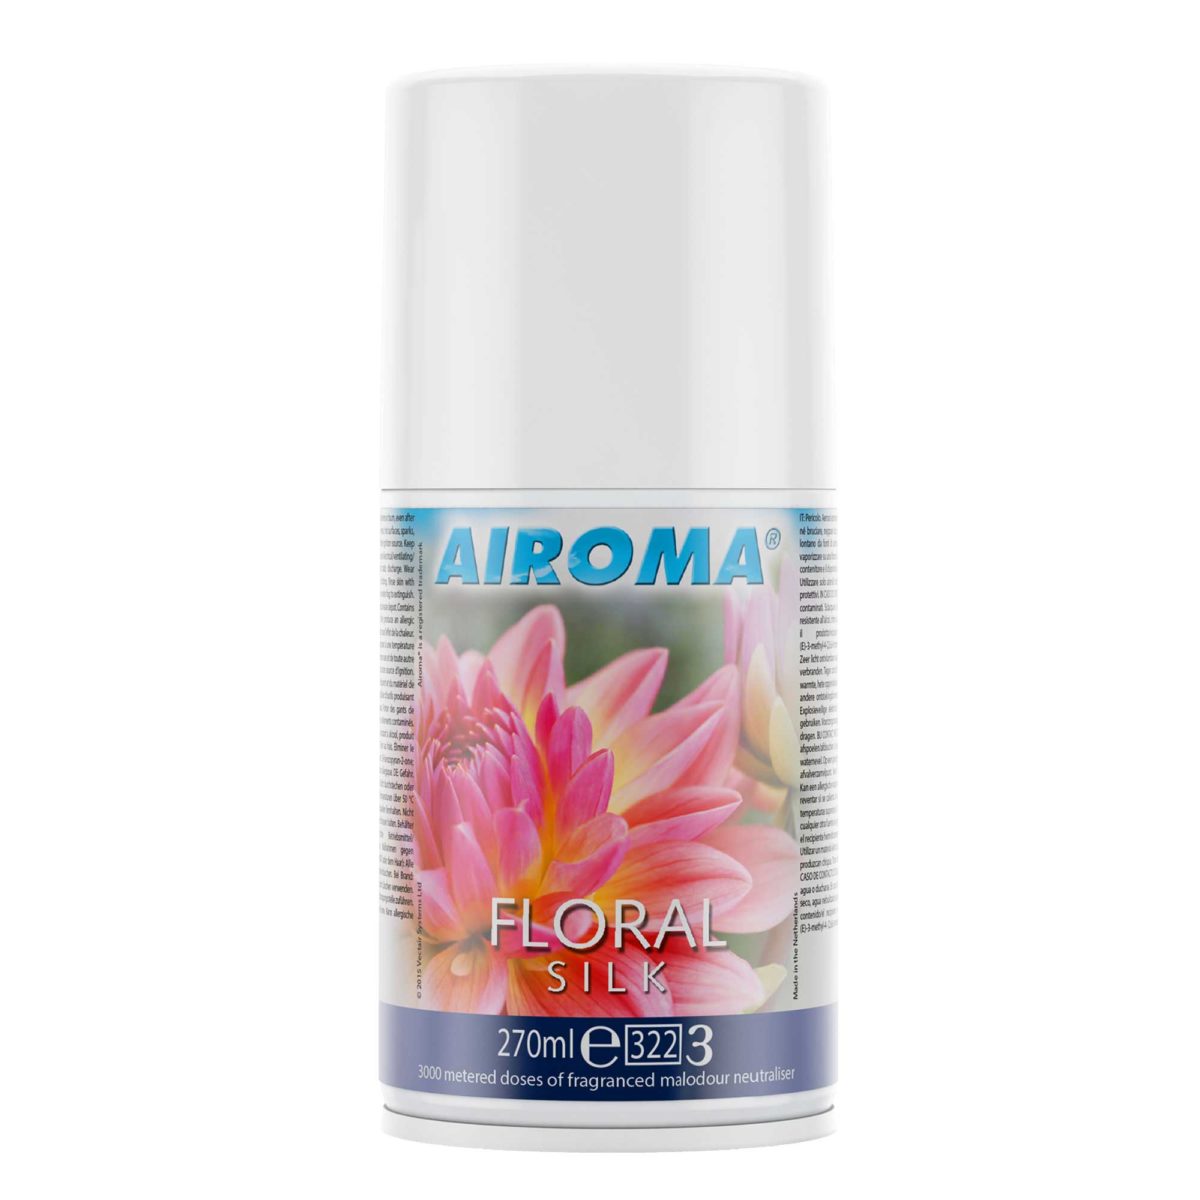 Vectair Airoma Floral Silk õhuvärskendaja, 270 ml,  karbis 12 tk